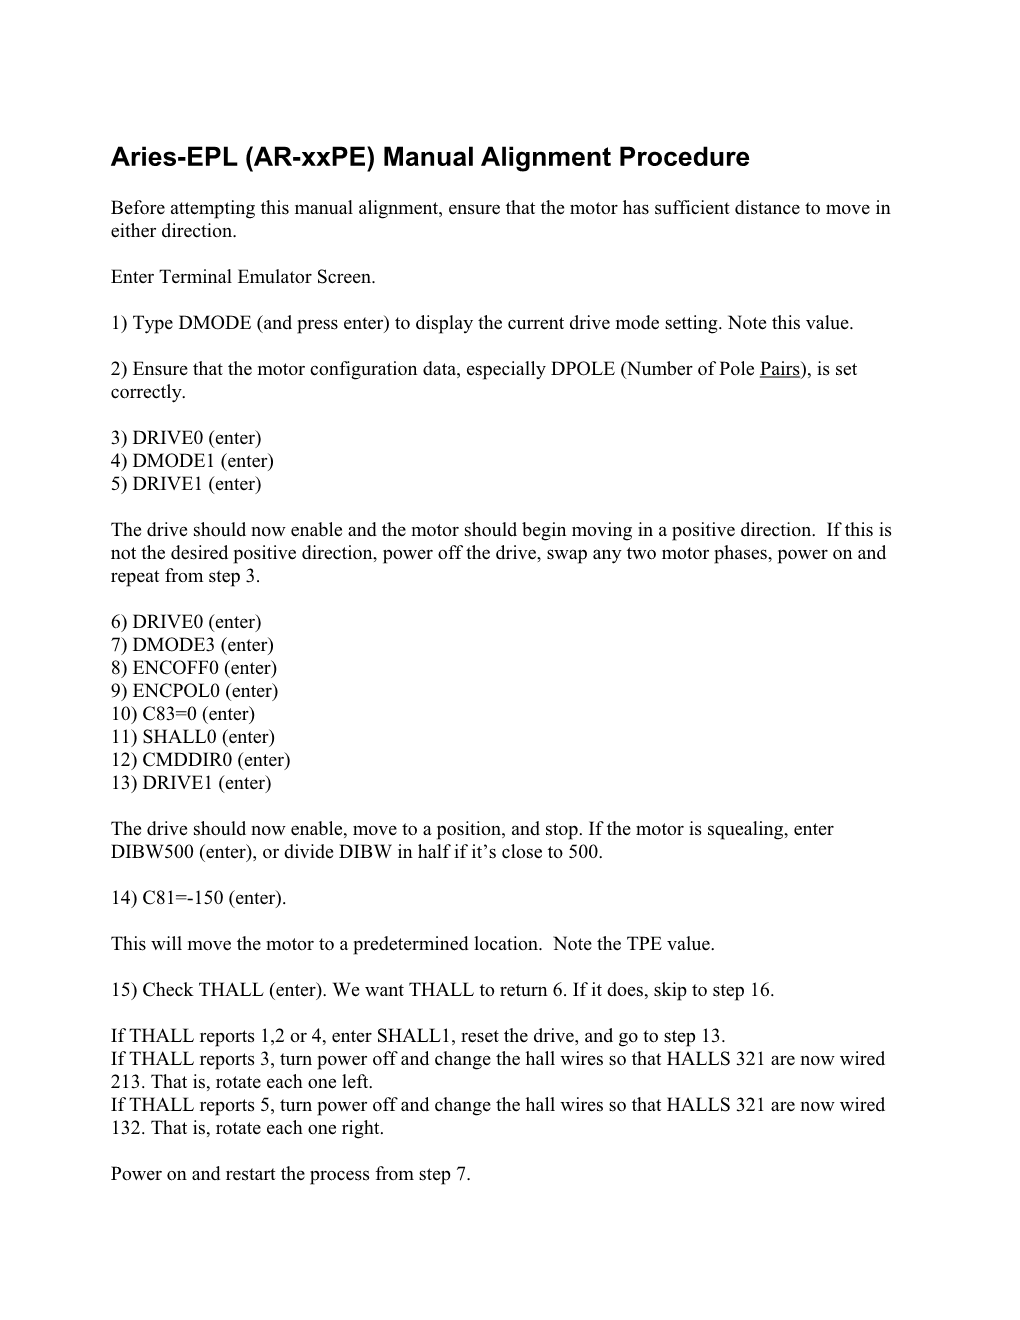 Aries Manual Alignment Procedure